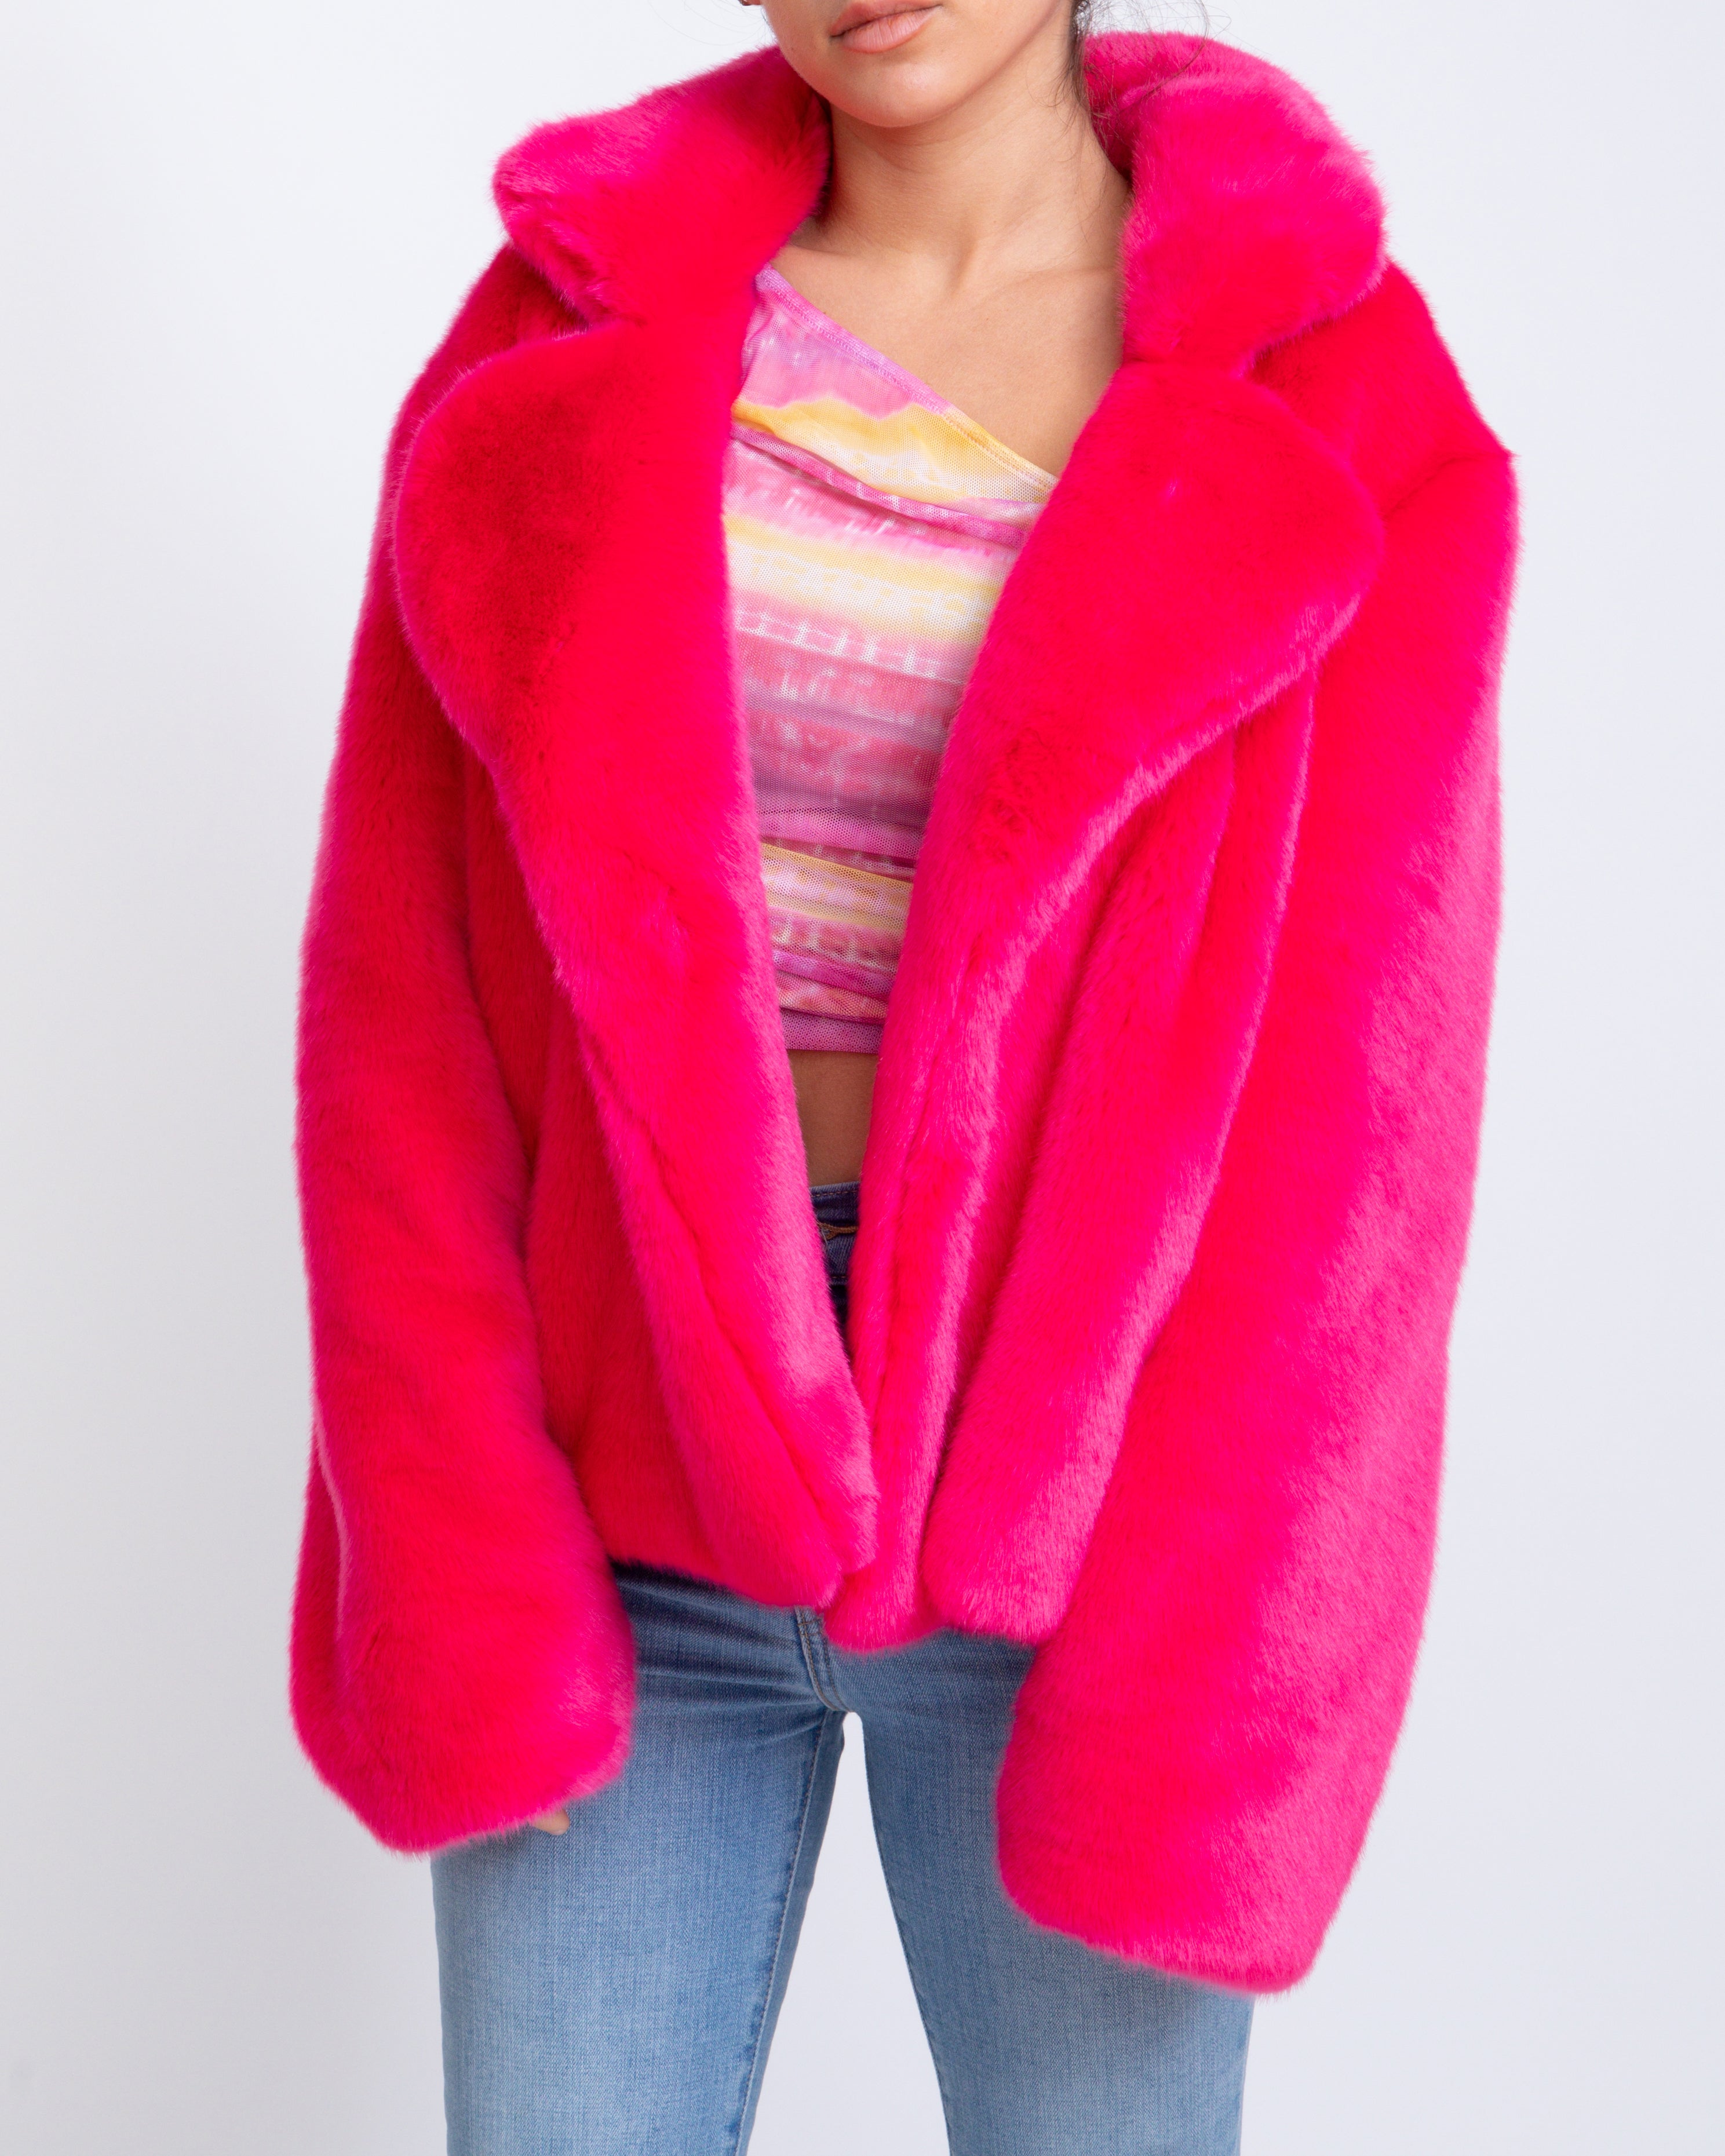 Hot Pink Faux Fur Coat - S